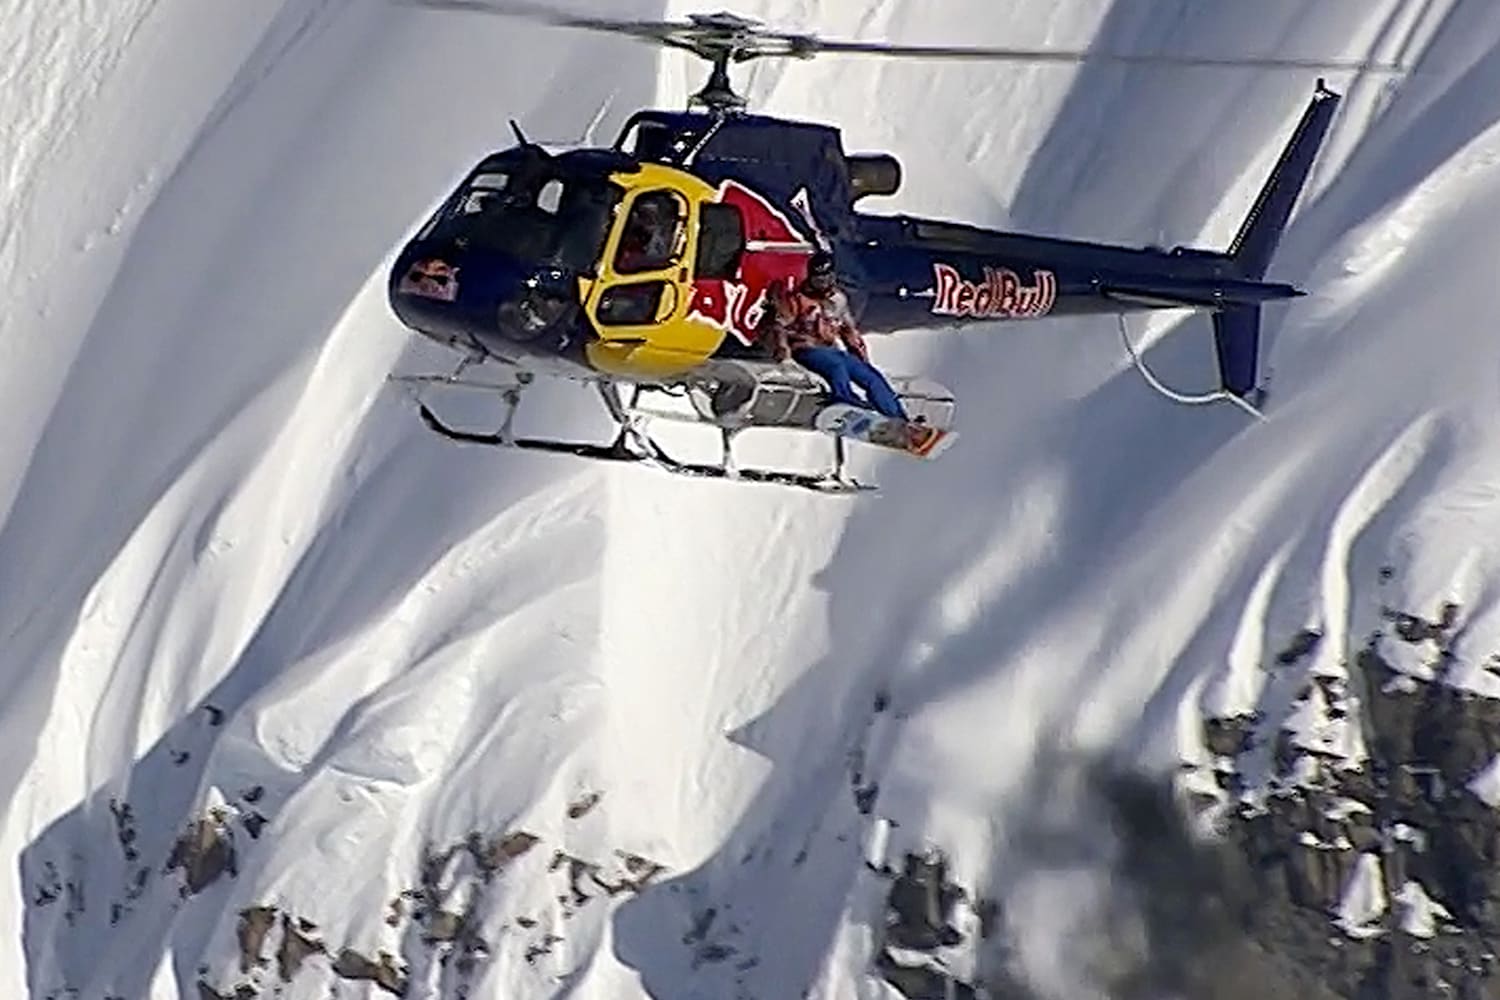 The Art of Flight Snowboarding film trailer